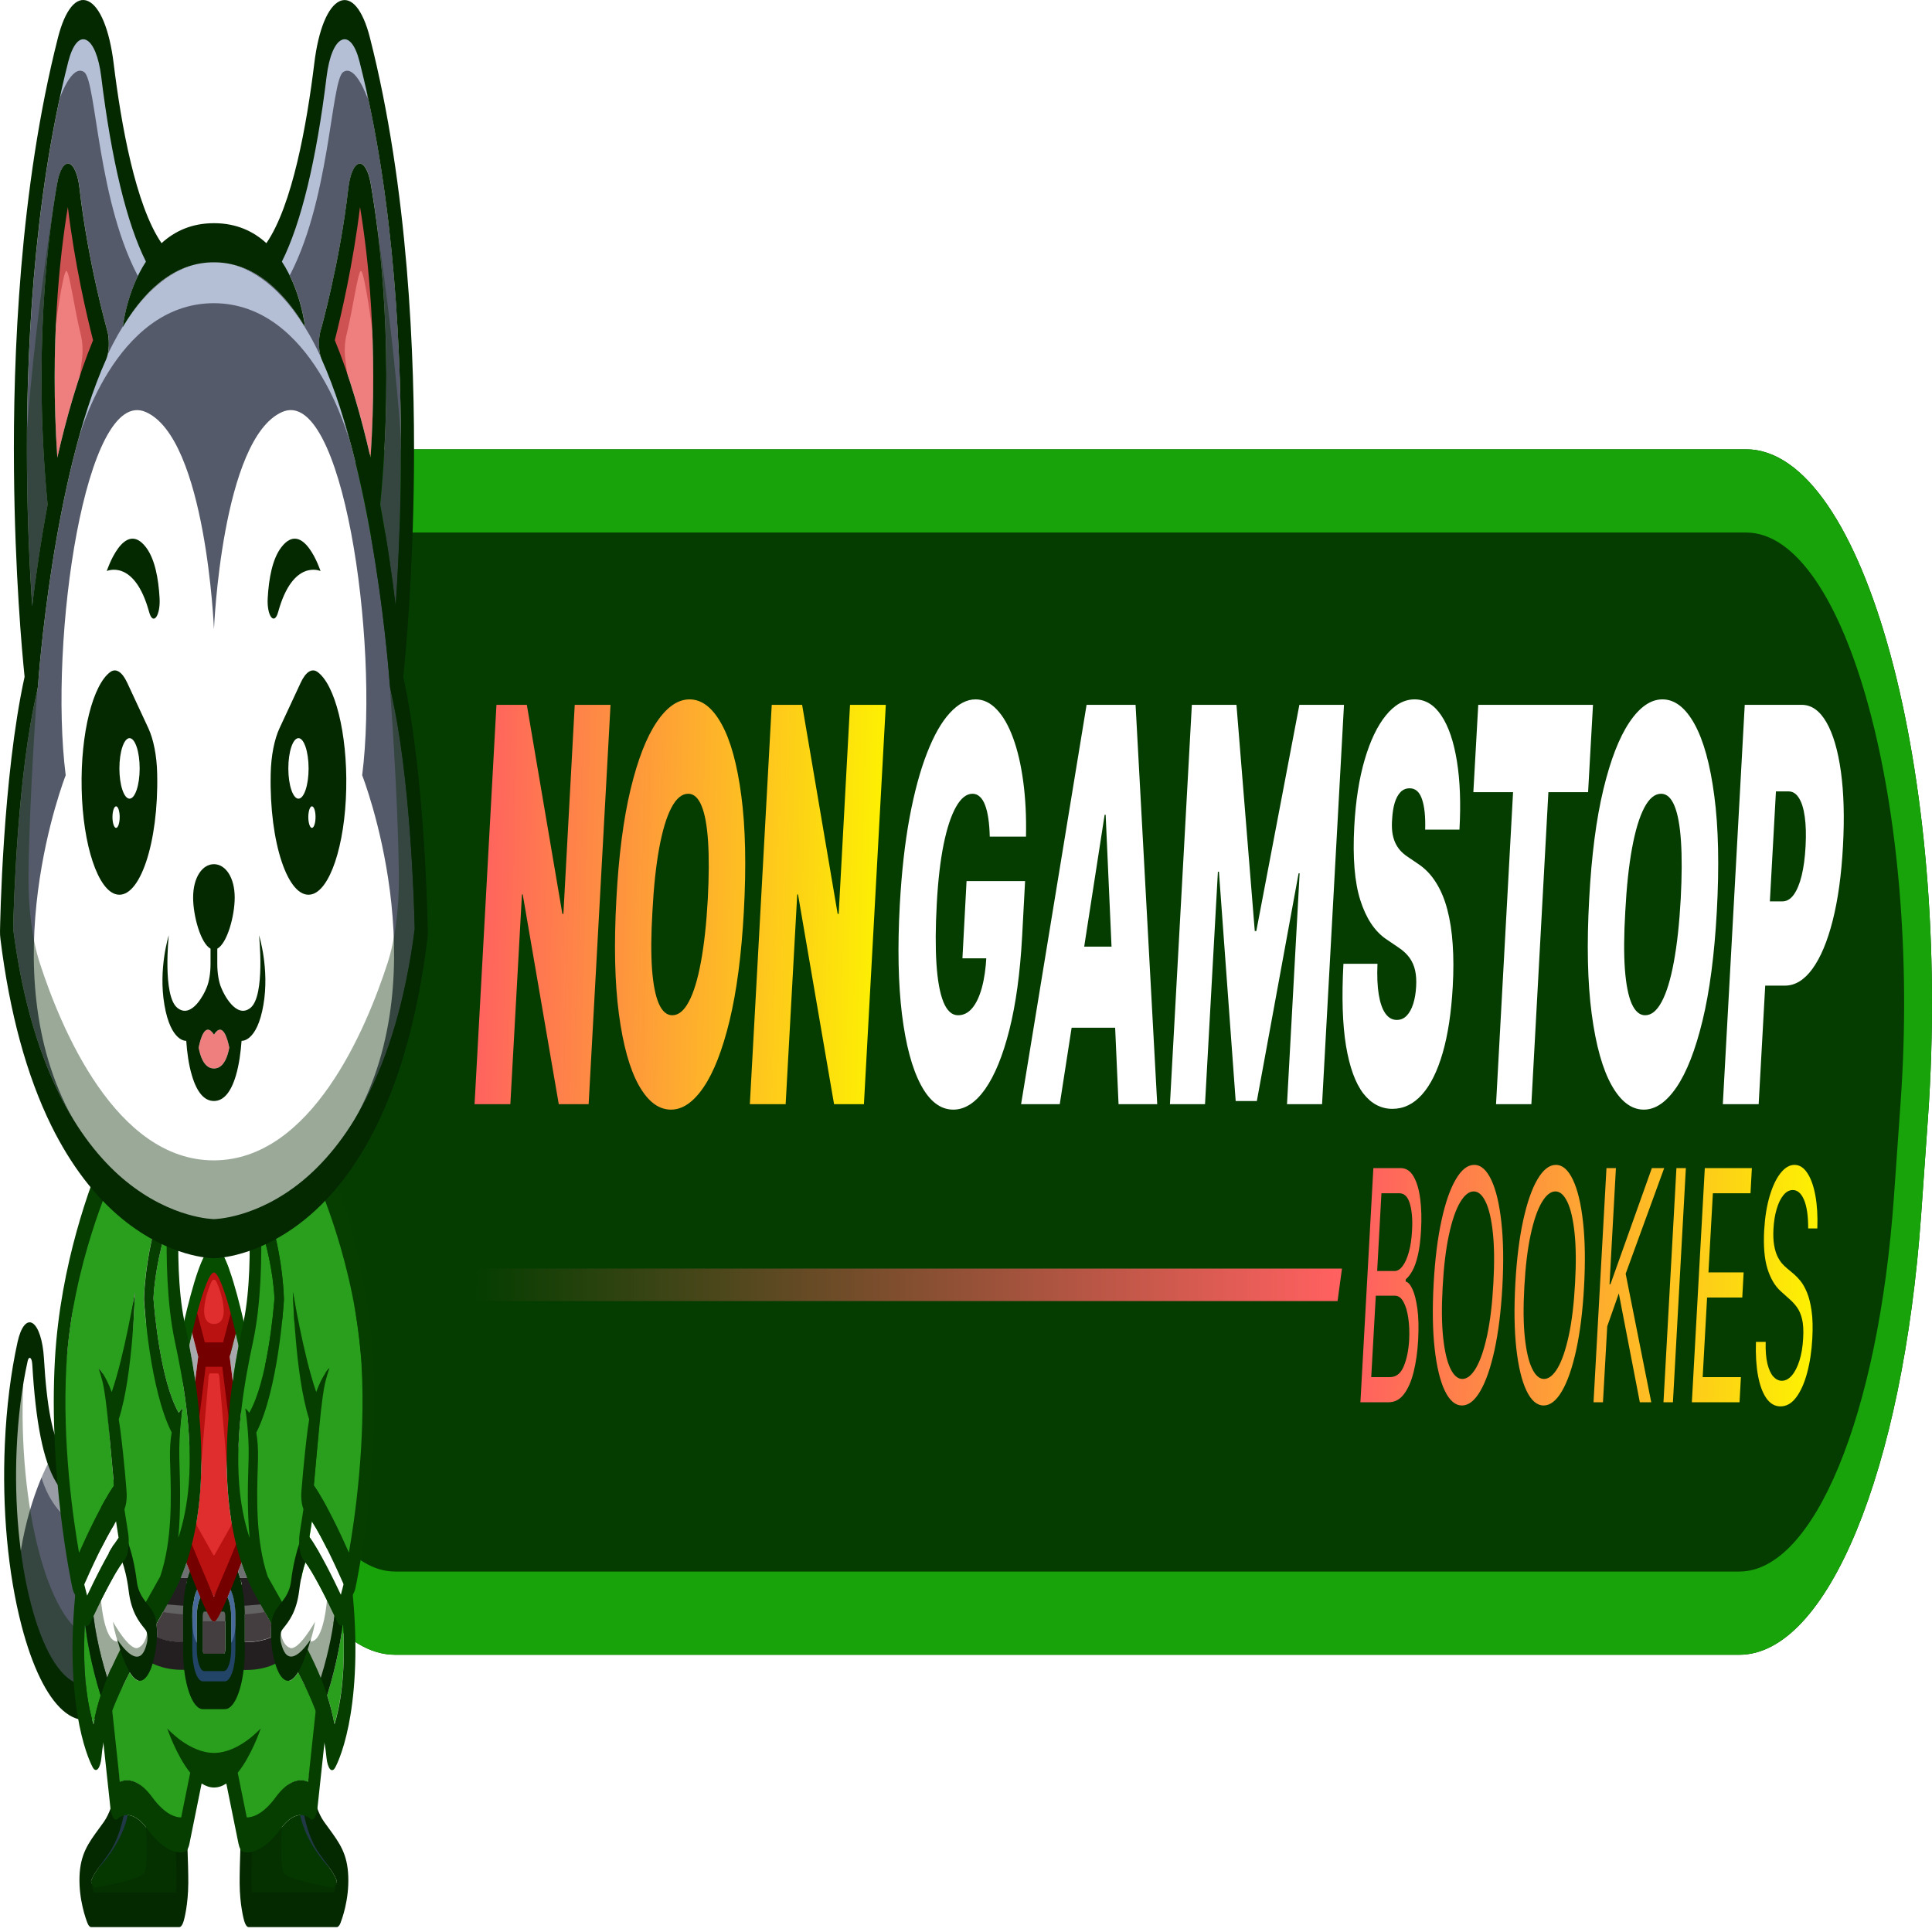 Non GamStop Bookies UK